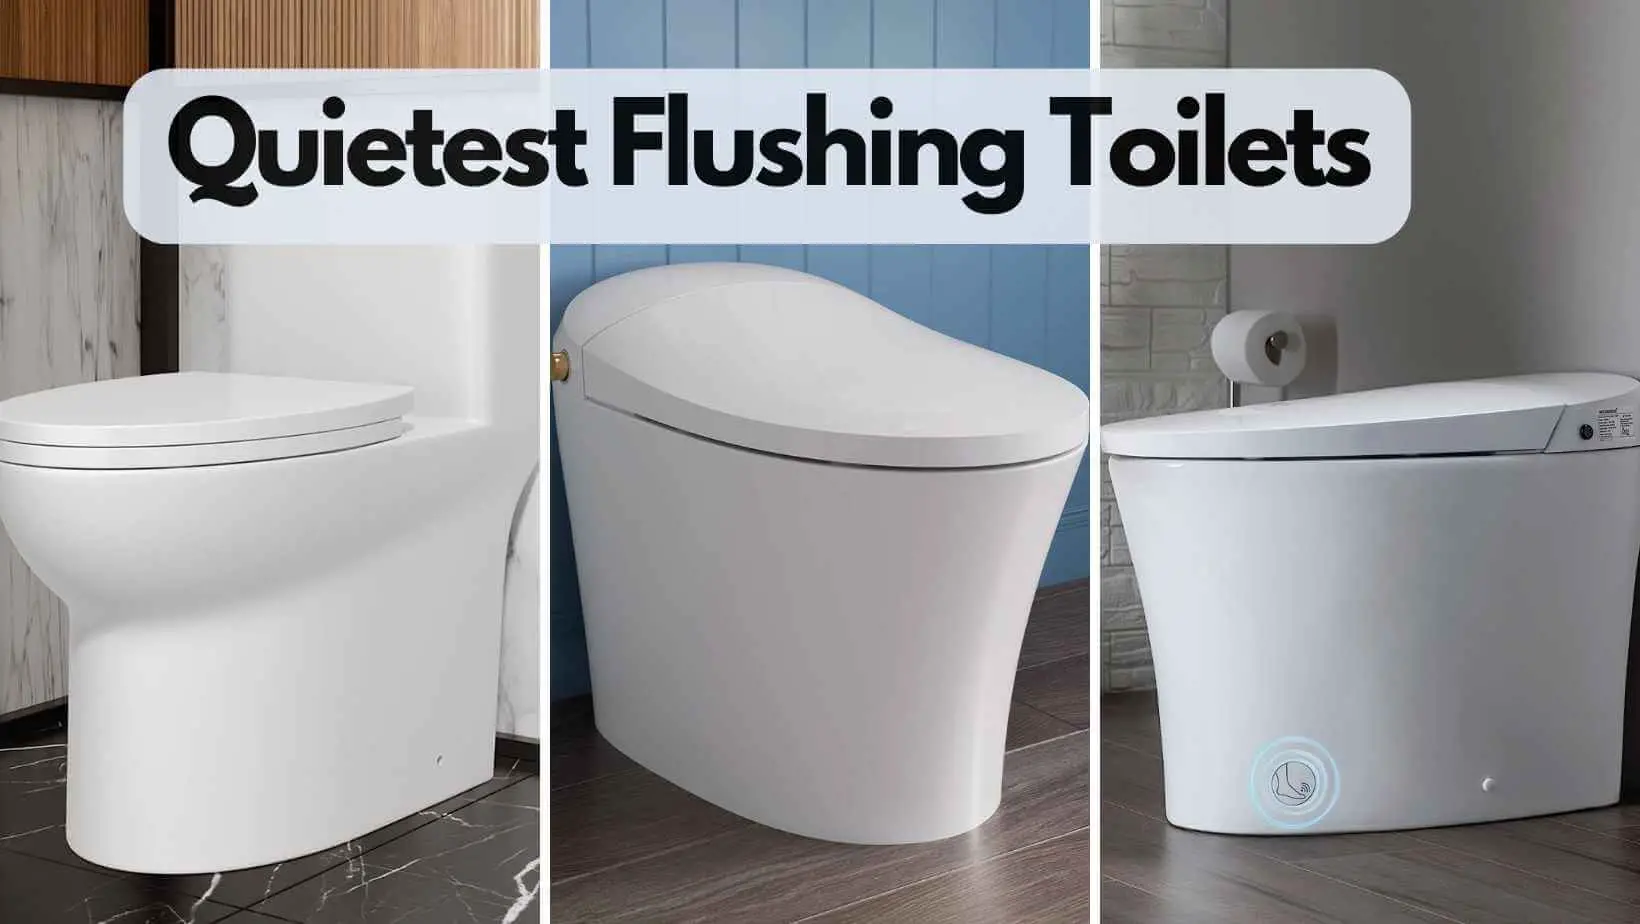 Quietest Flushing Toilets